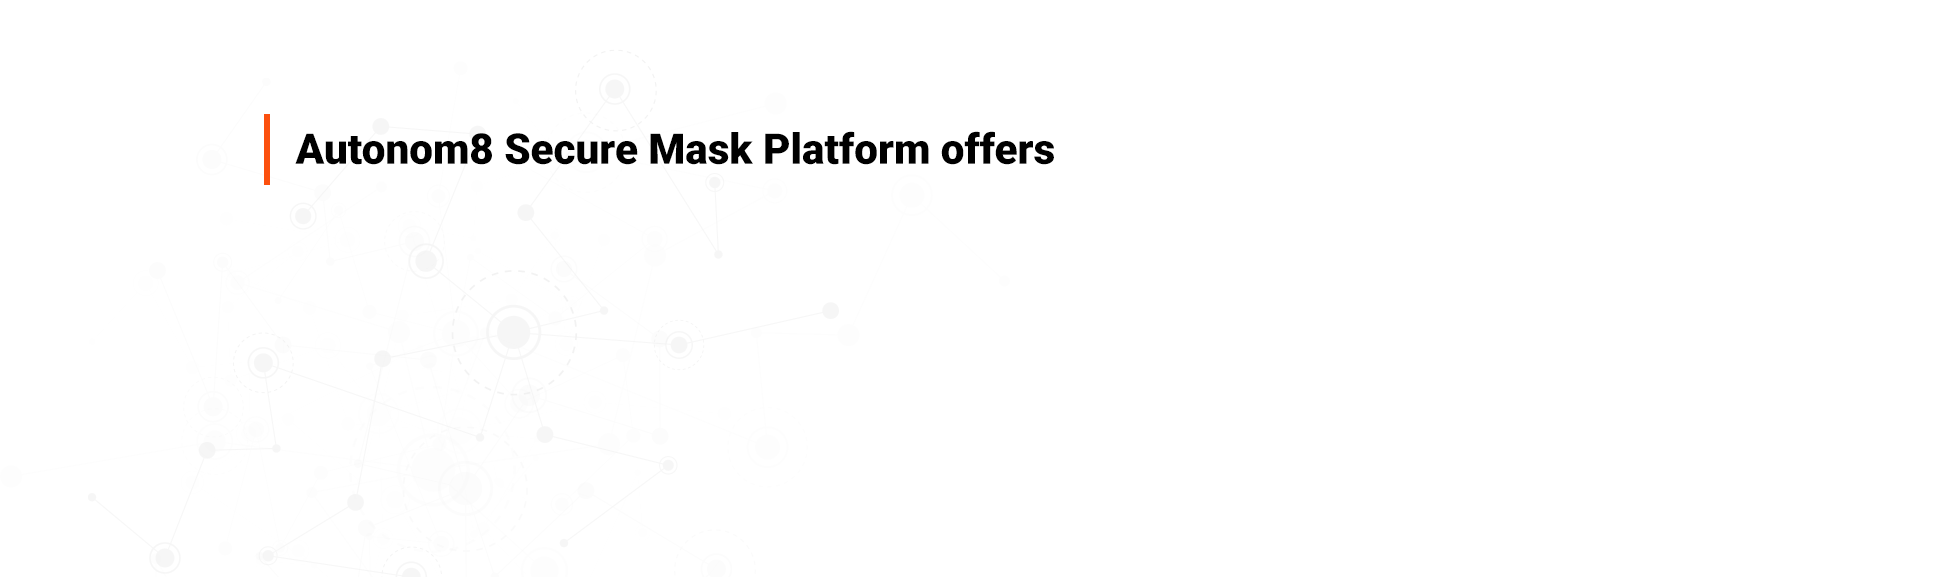 platform-offers